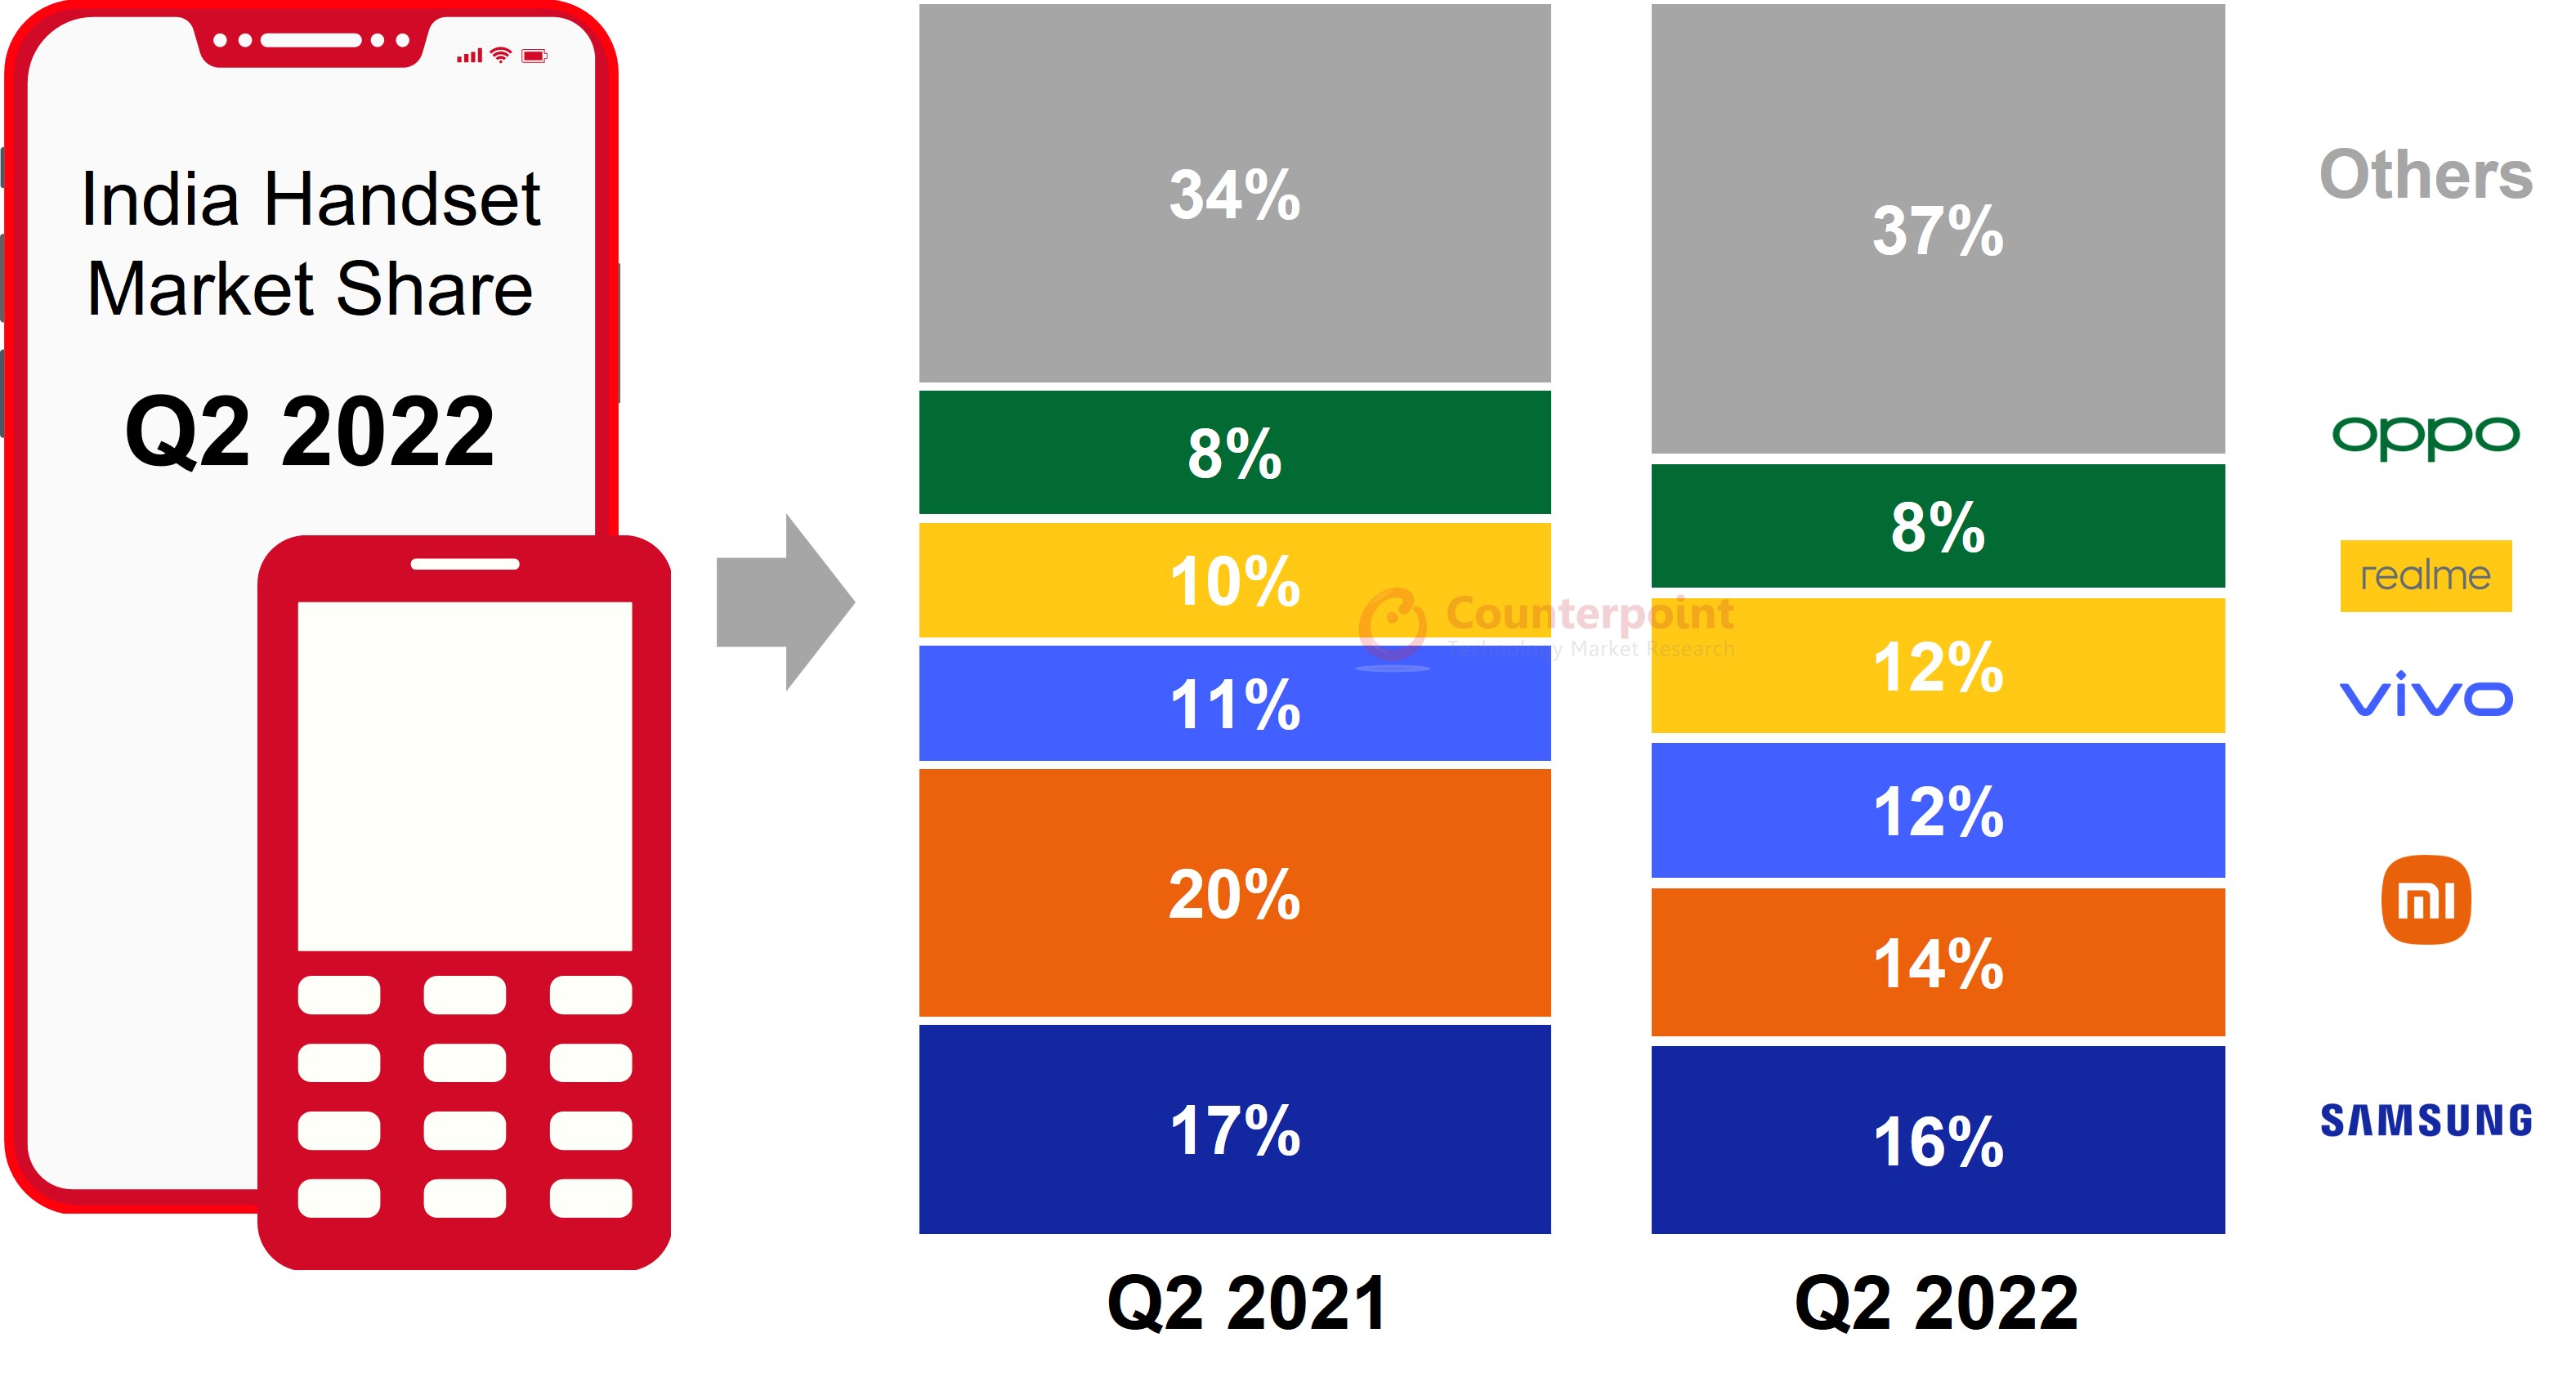 India Handset Market Share, Q2 2022